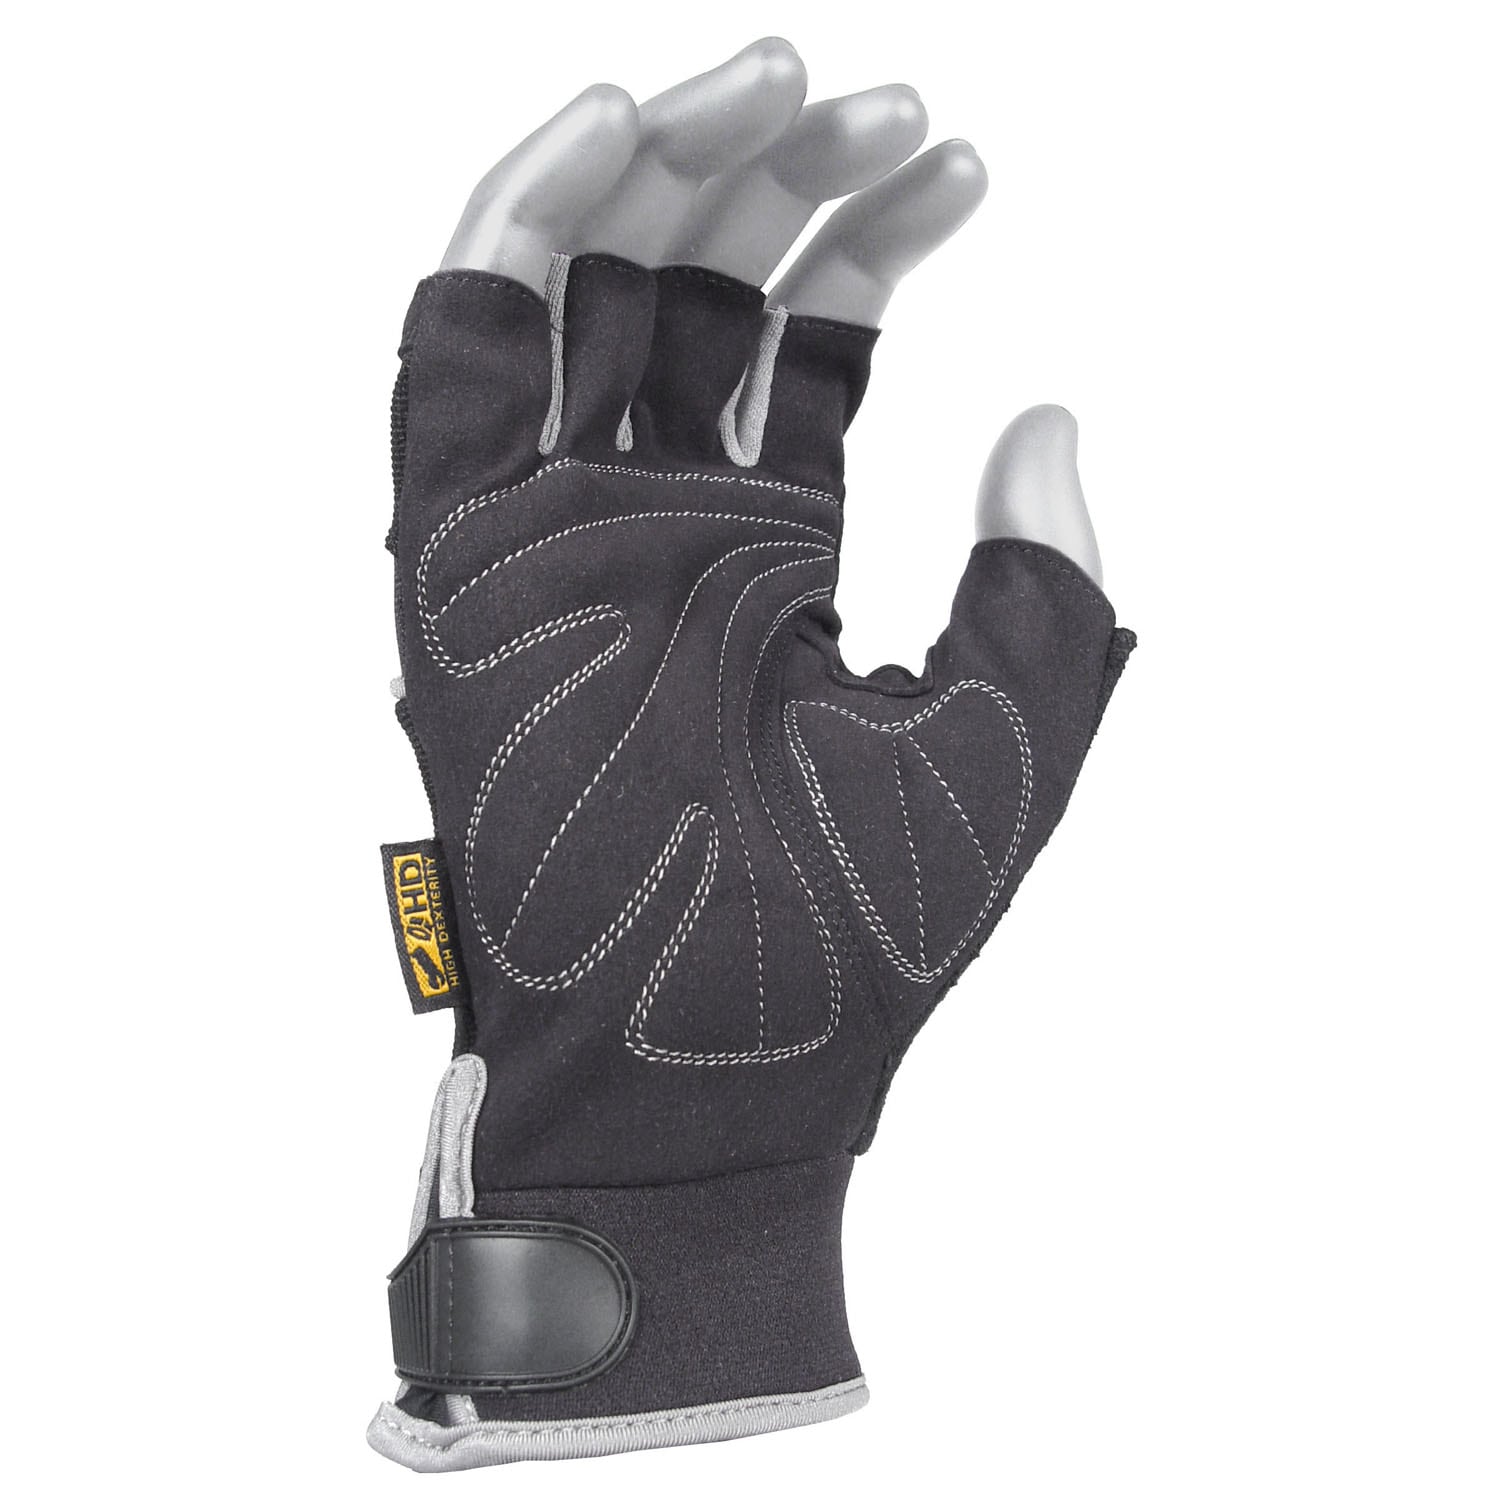 DEWALT Medium Black Synthetic Leather Gloves, (1-Pair) in the Work